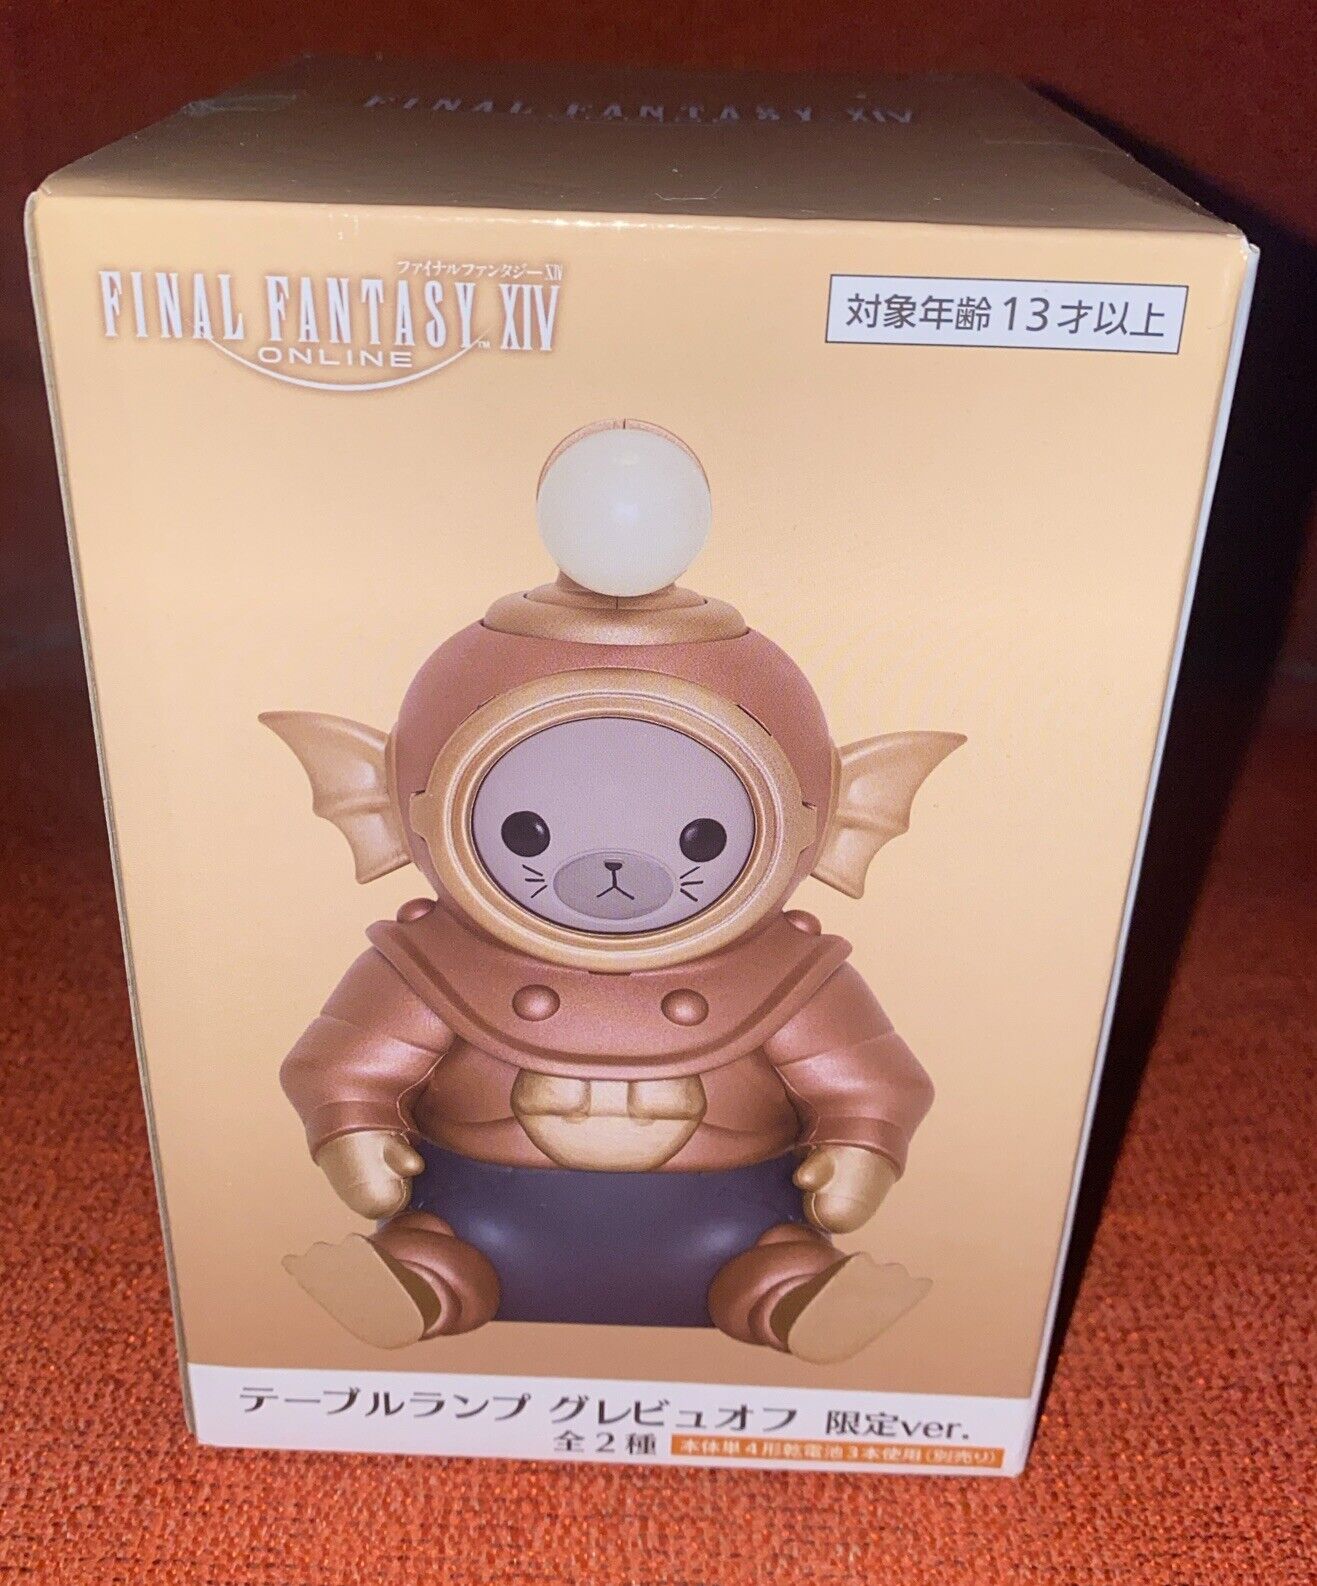 Final Fantasy XIV Grebuloff Taito Table Lamp New Condition Japanese Import